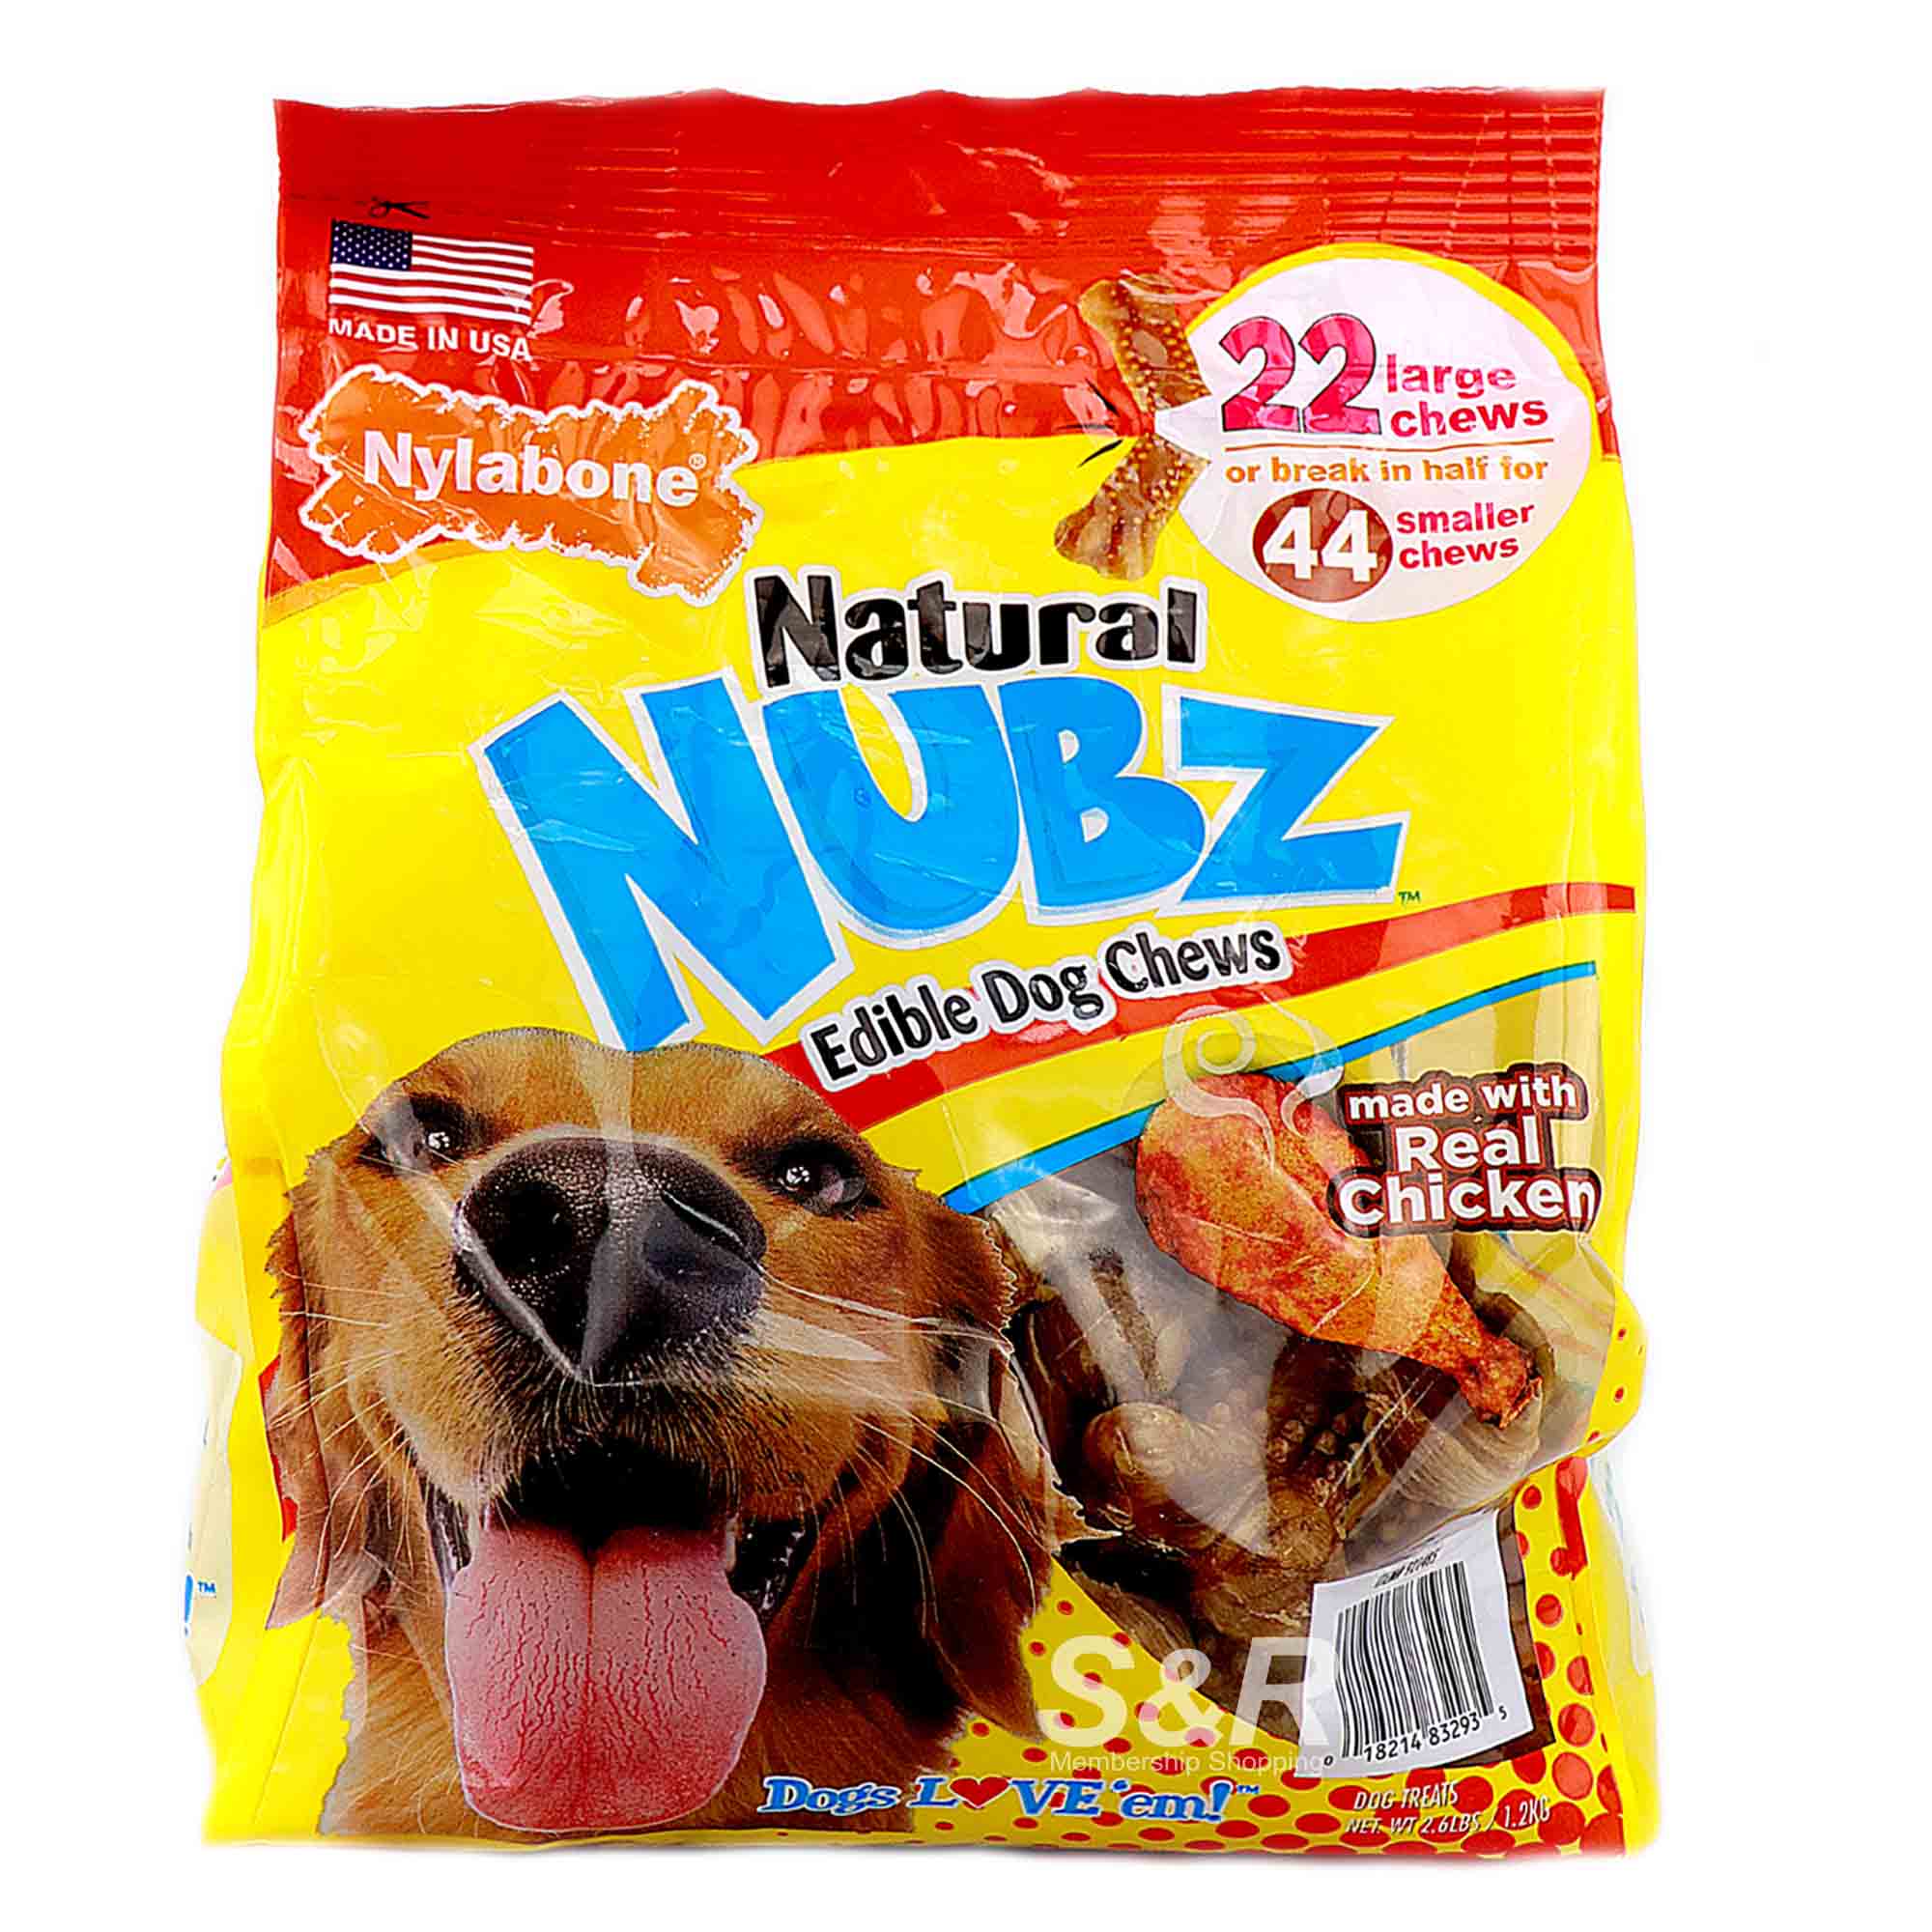 Nylabone Natural Nubz Edible Dog Chews 1.2kg